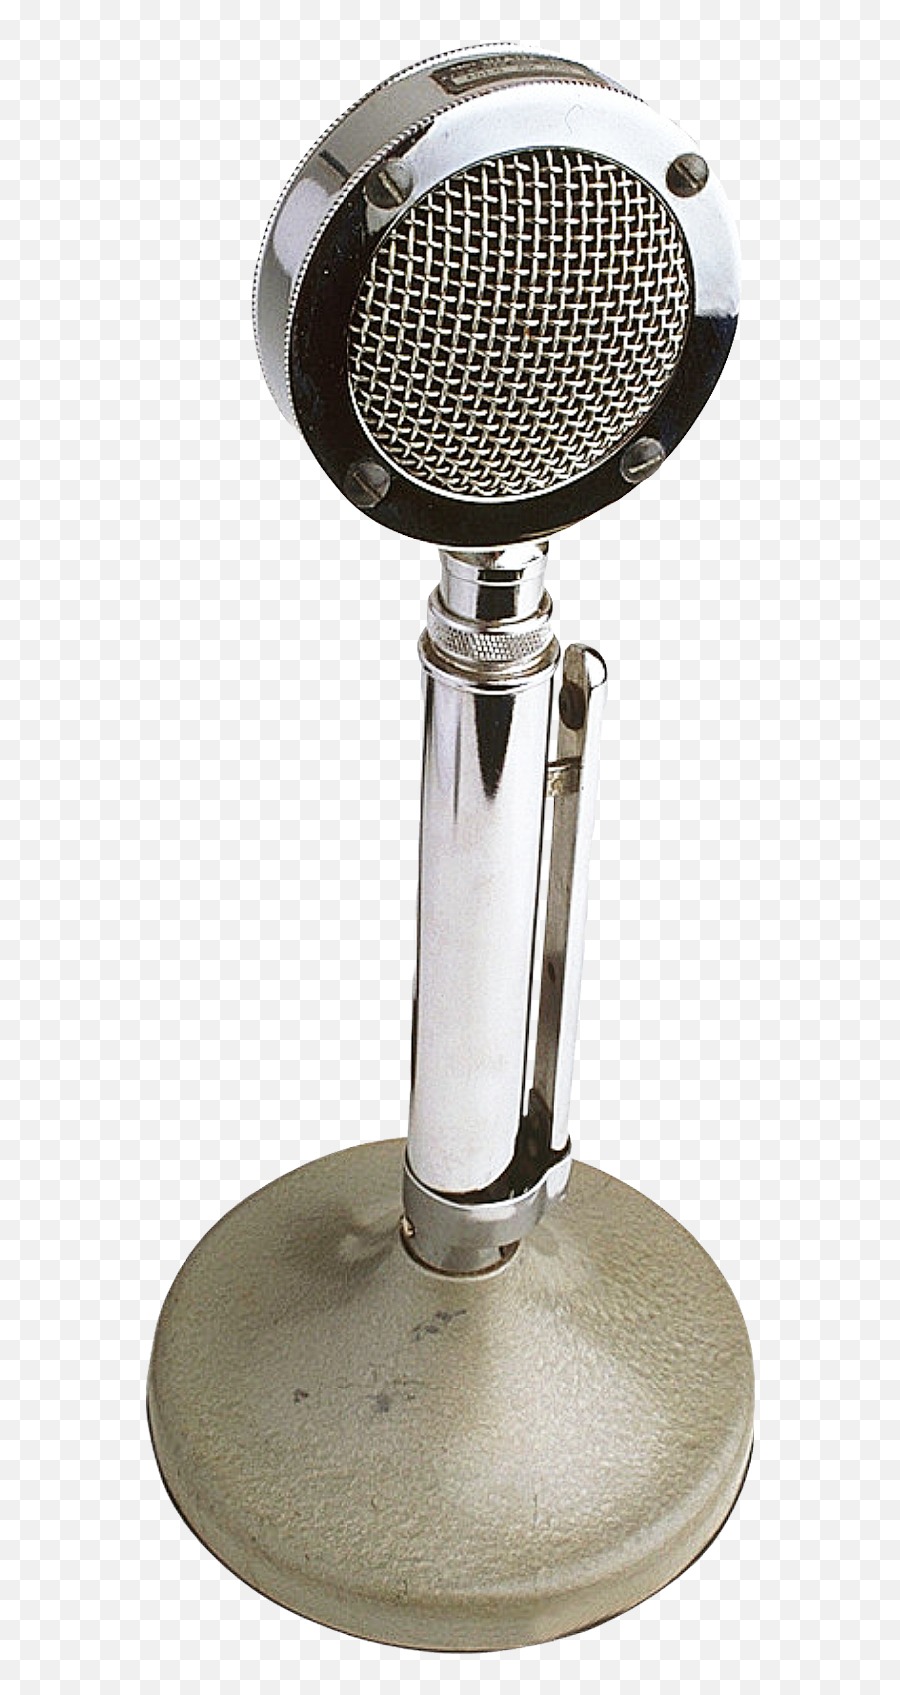 Microphone Png Transparent Image - Pngpix Wireless Microphone,Microphone Transparent